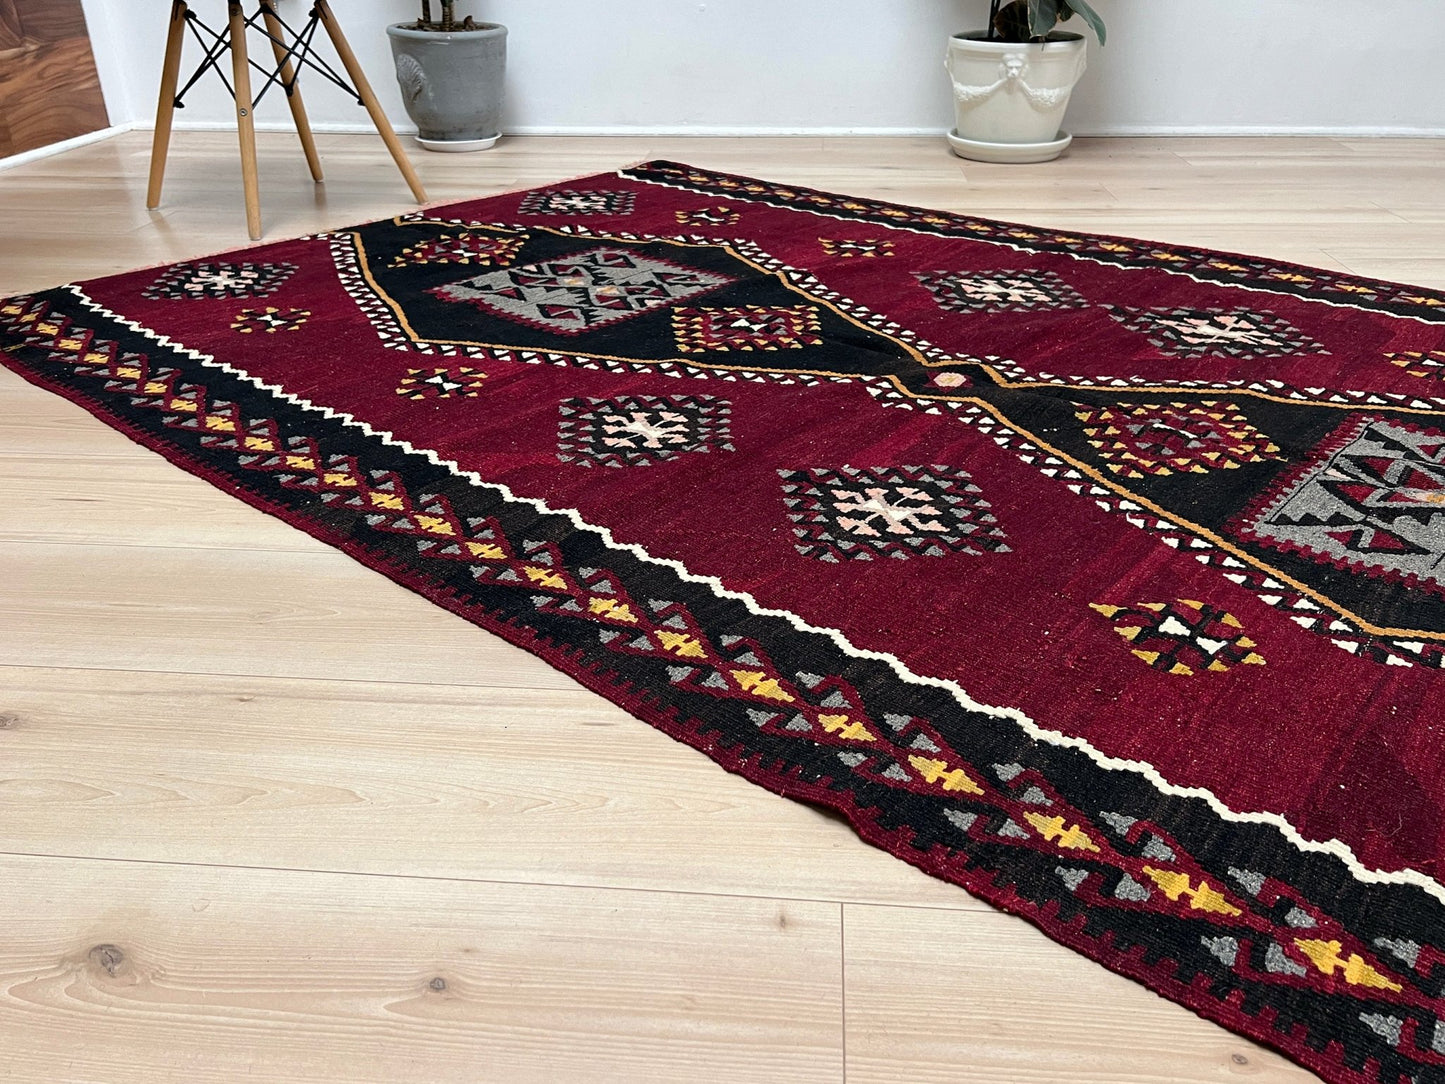 kayseri vintage turkish rug shop Sf Bay Area. Buy handmade wool flatweave rug store california. Vibrant color warm color rug in living room setting. 